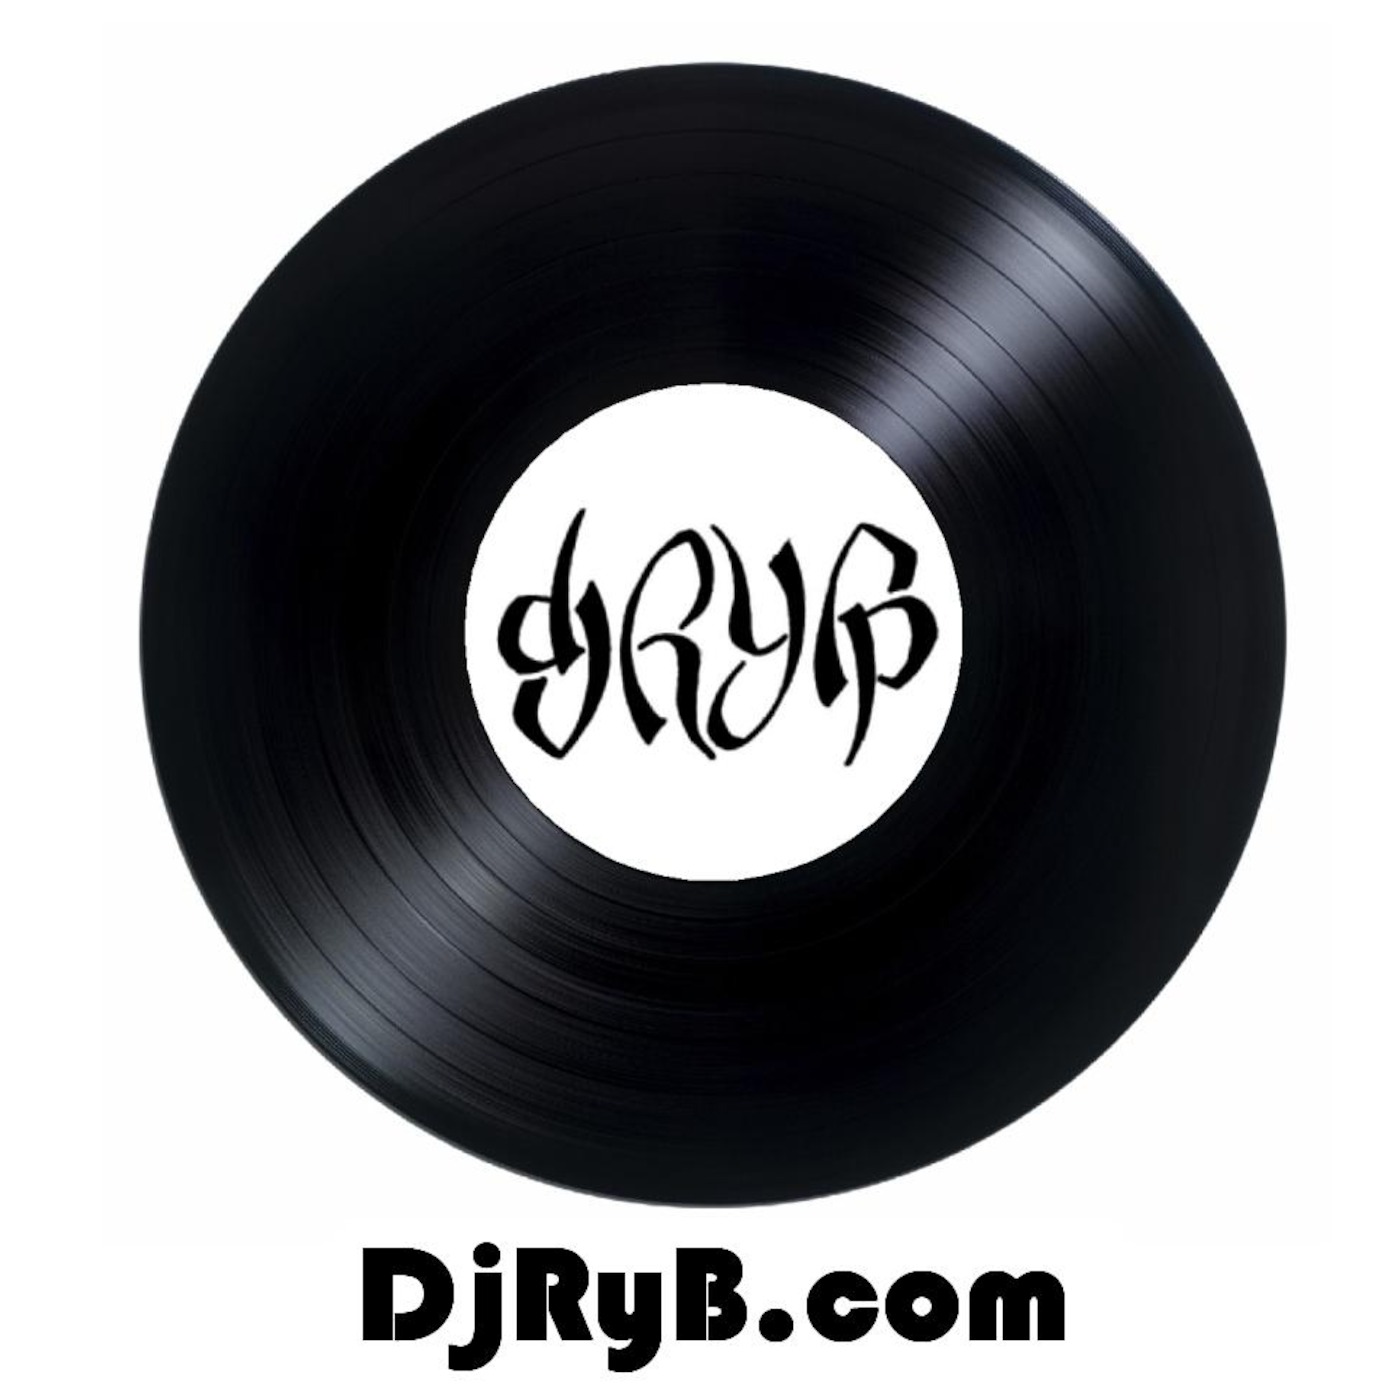 Dj RyB's Old School Hip Hop Dance Mix